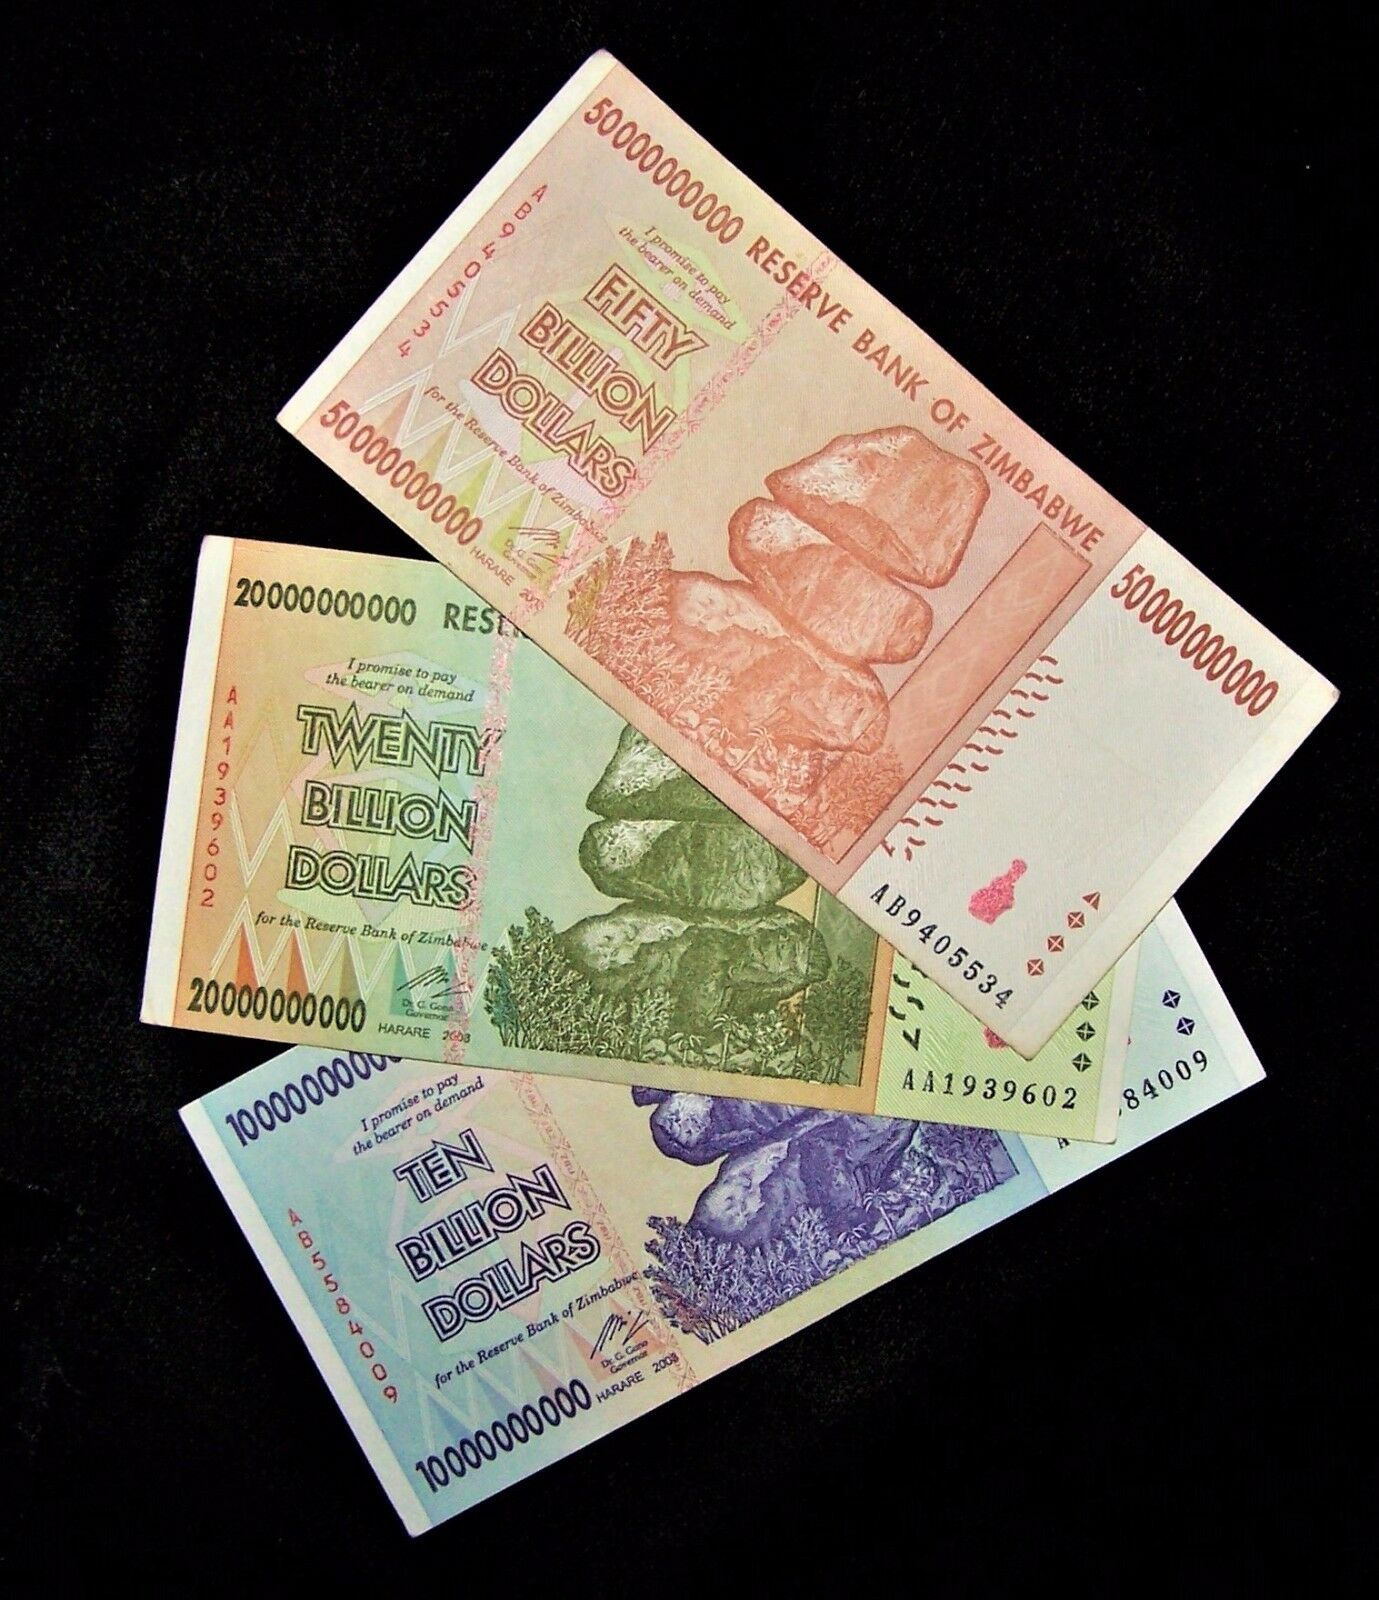 3 Zimbabwe Banknotes-1 X 10, 20 & 50 Billion Dollars -2008 Series Currency